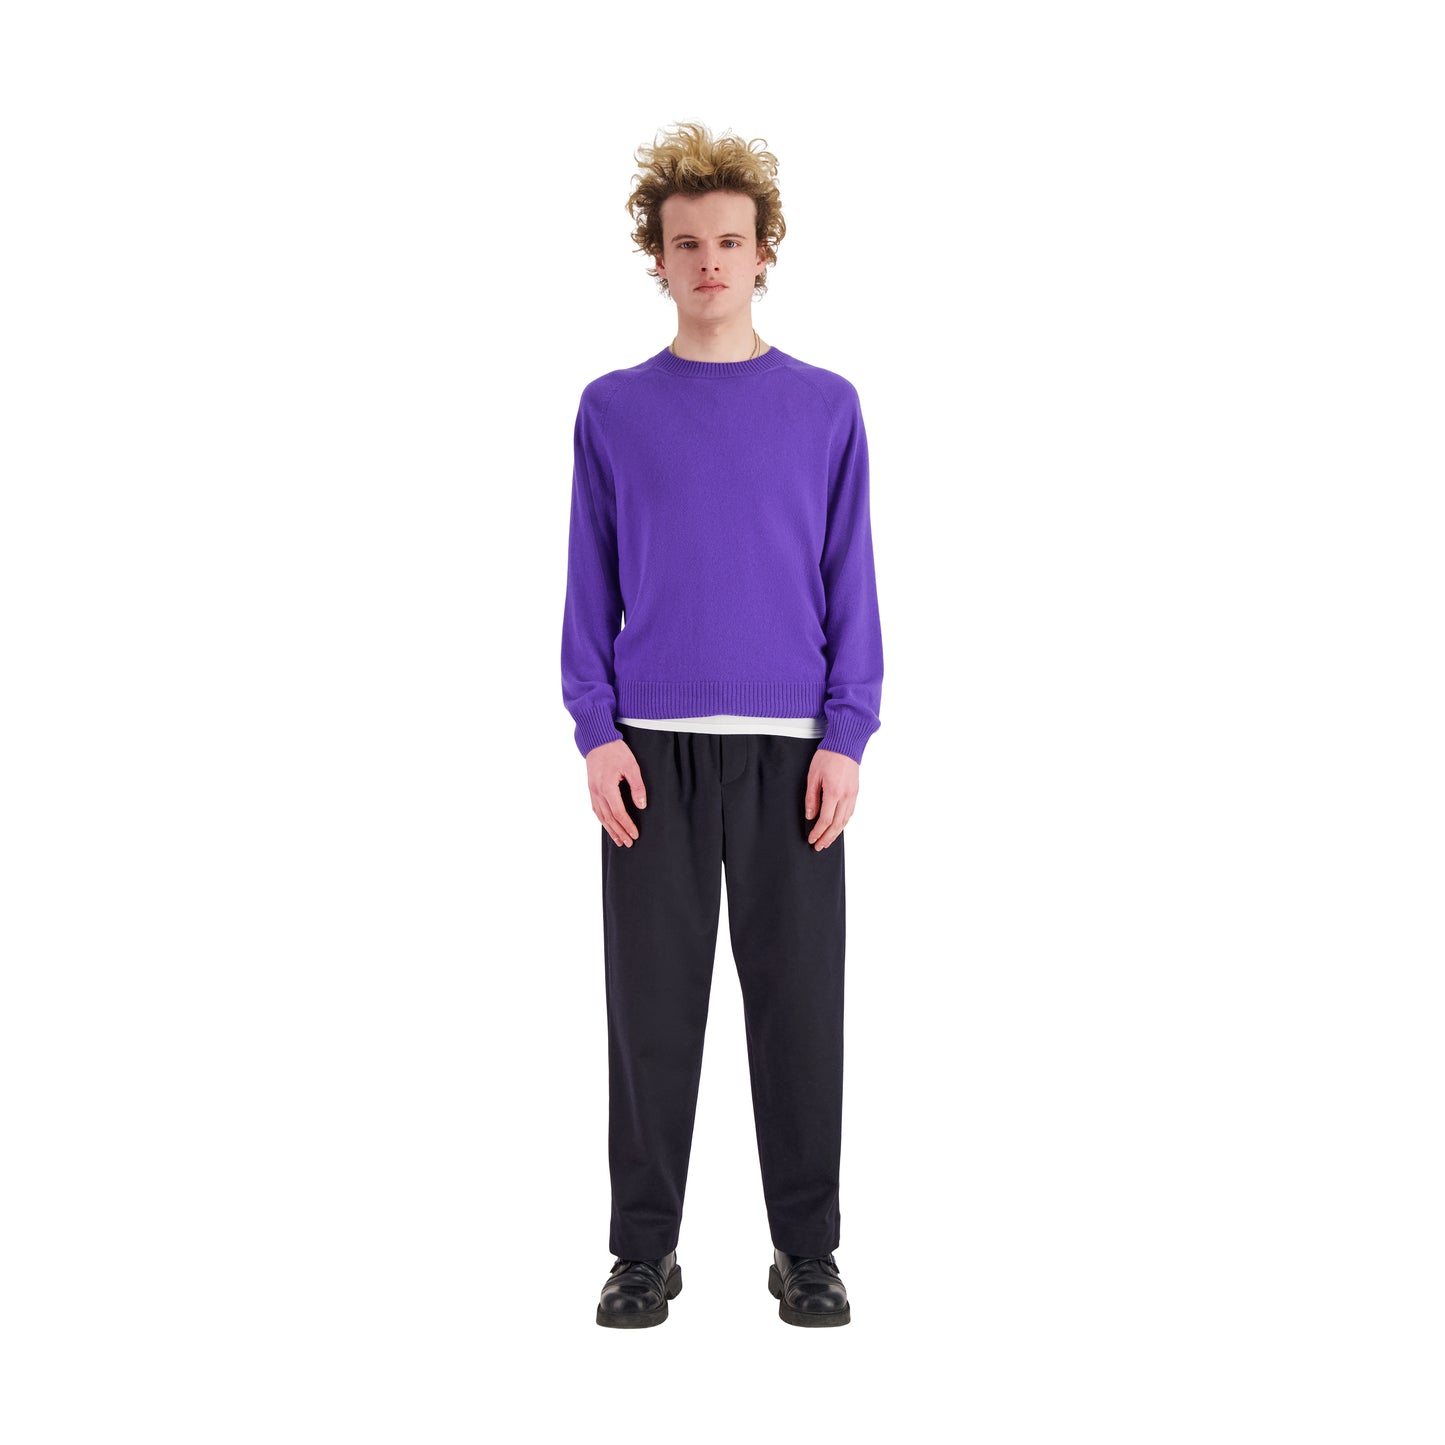 Jack Crew Neck Cashmere Sweater Bright Purple